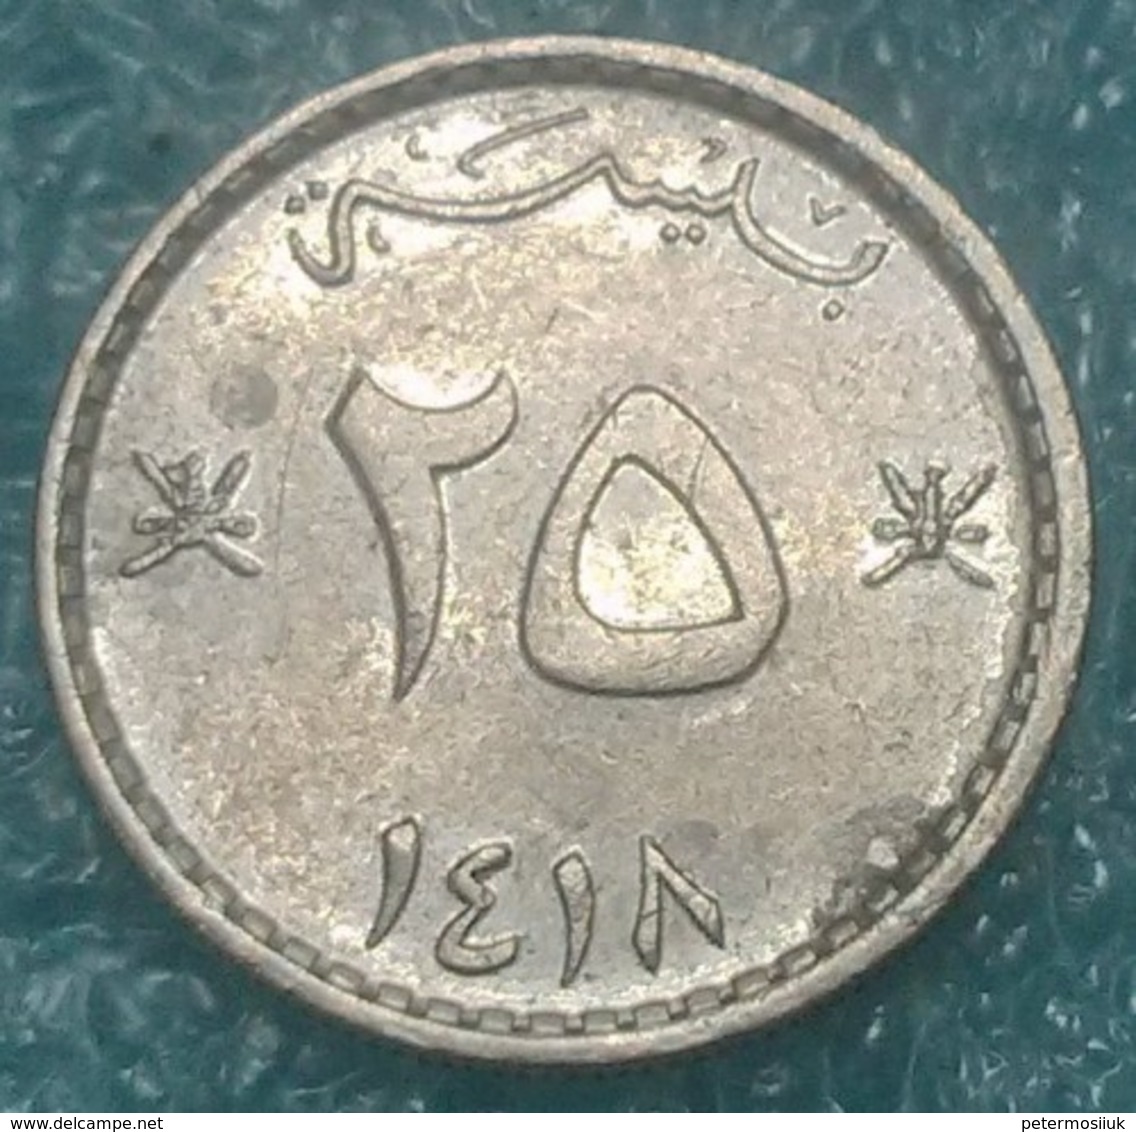 Oman 25 Baisa, 1418 (1997) -4142 - Oman